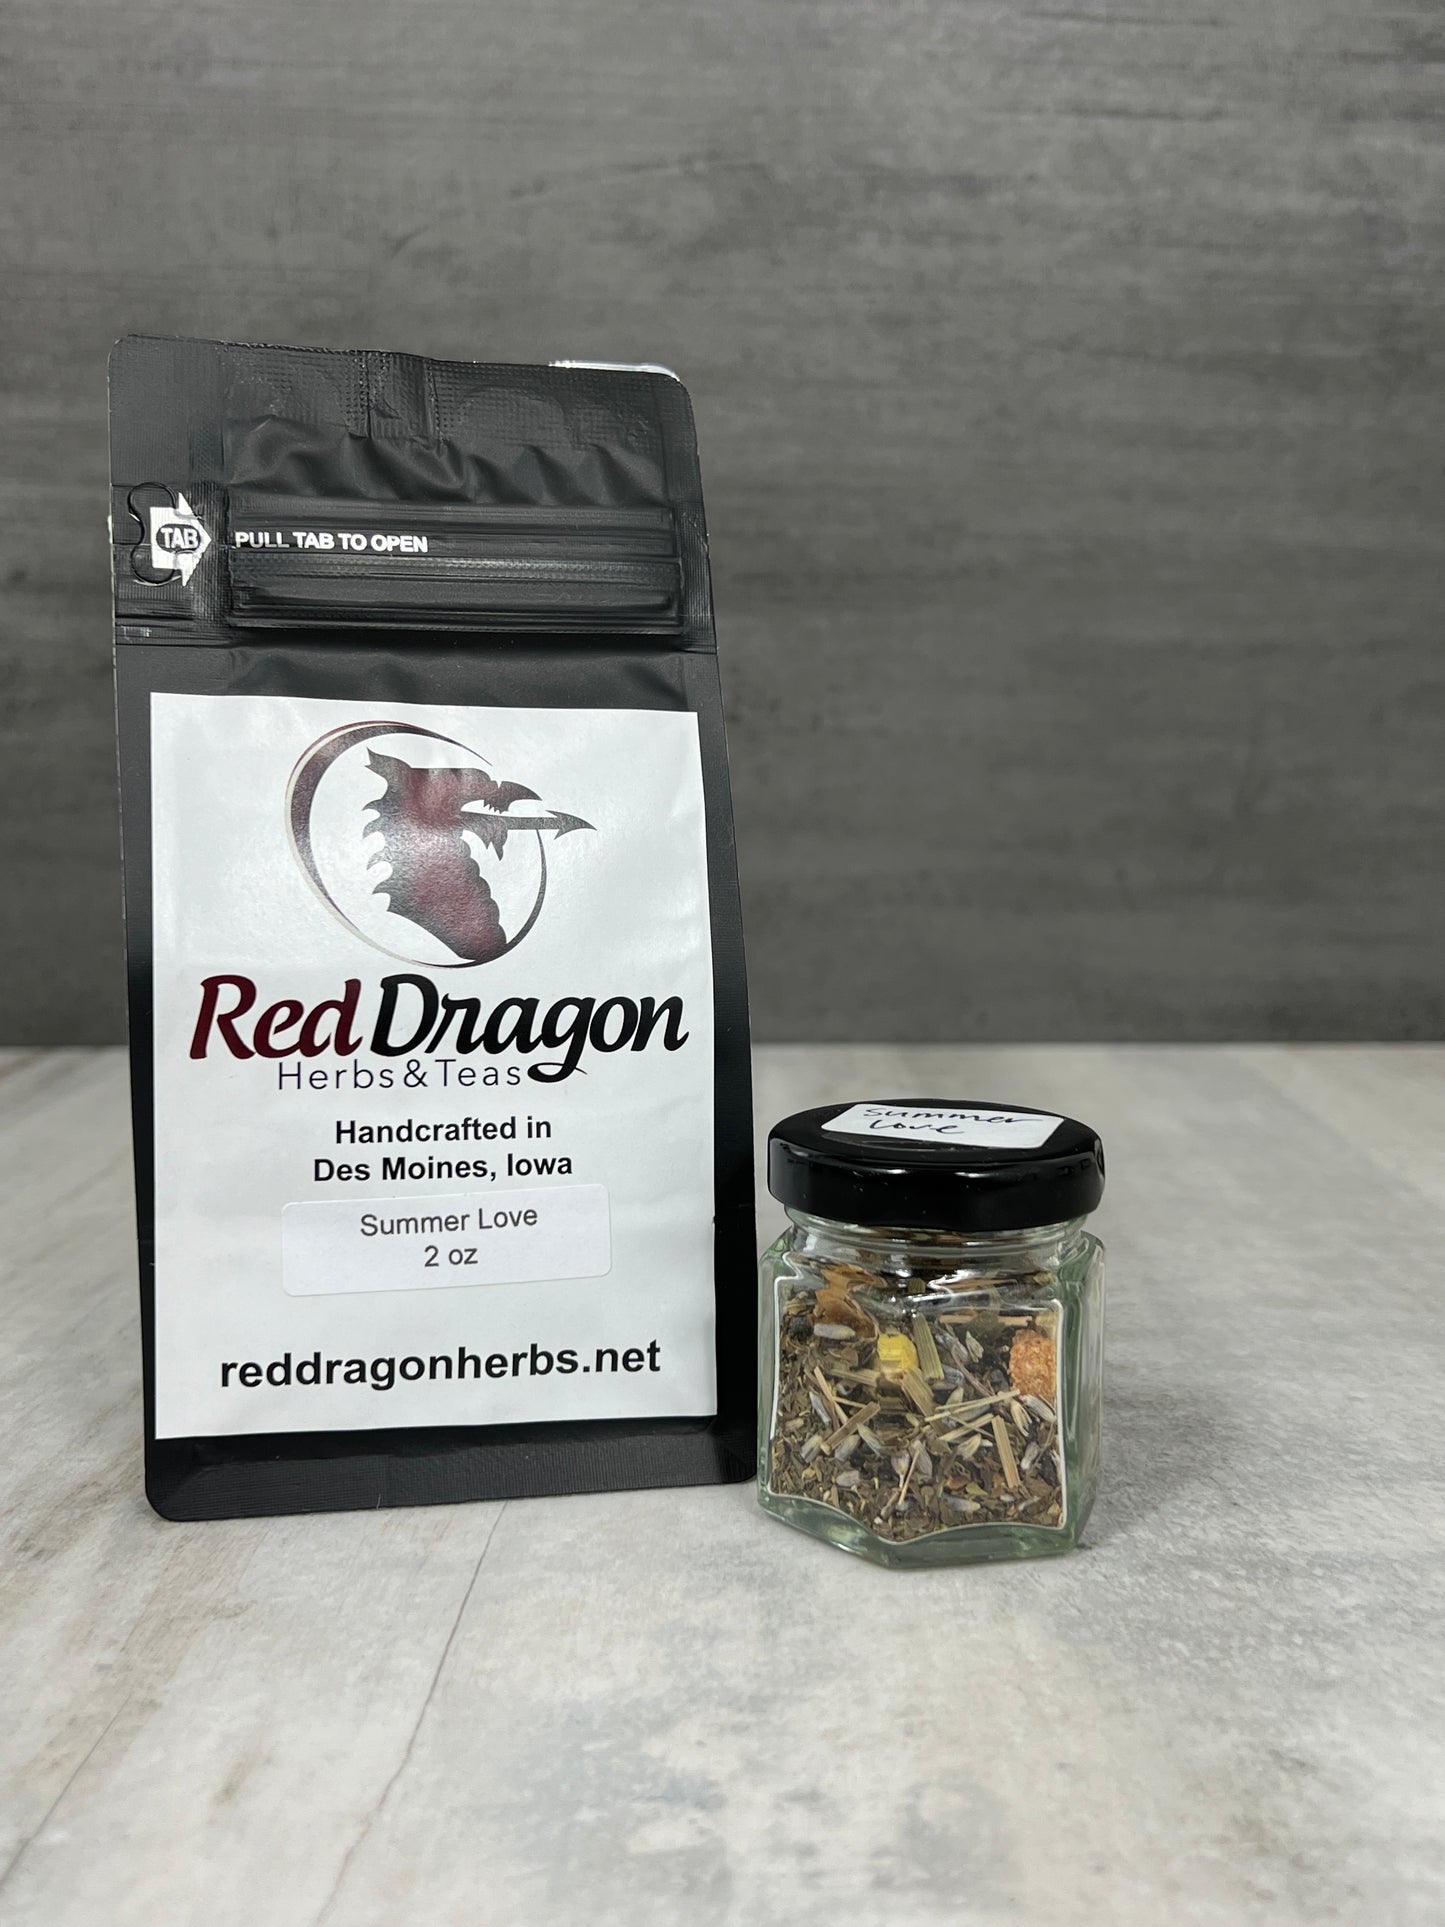 Red Dragon Teas